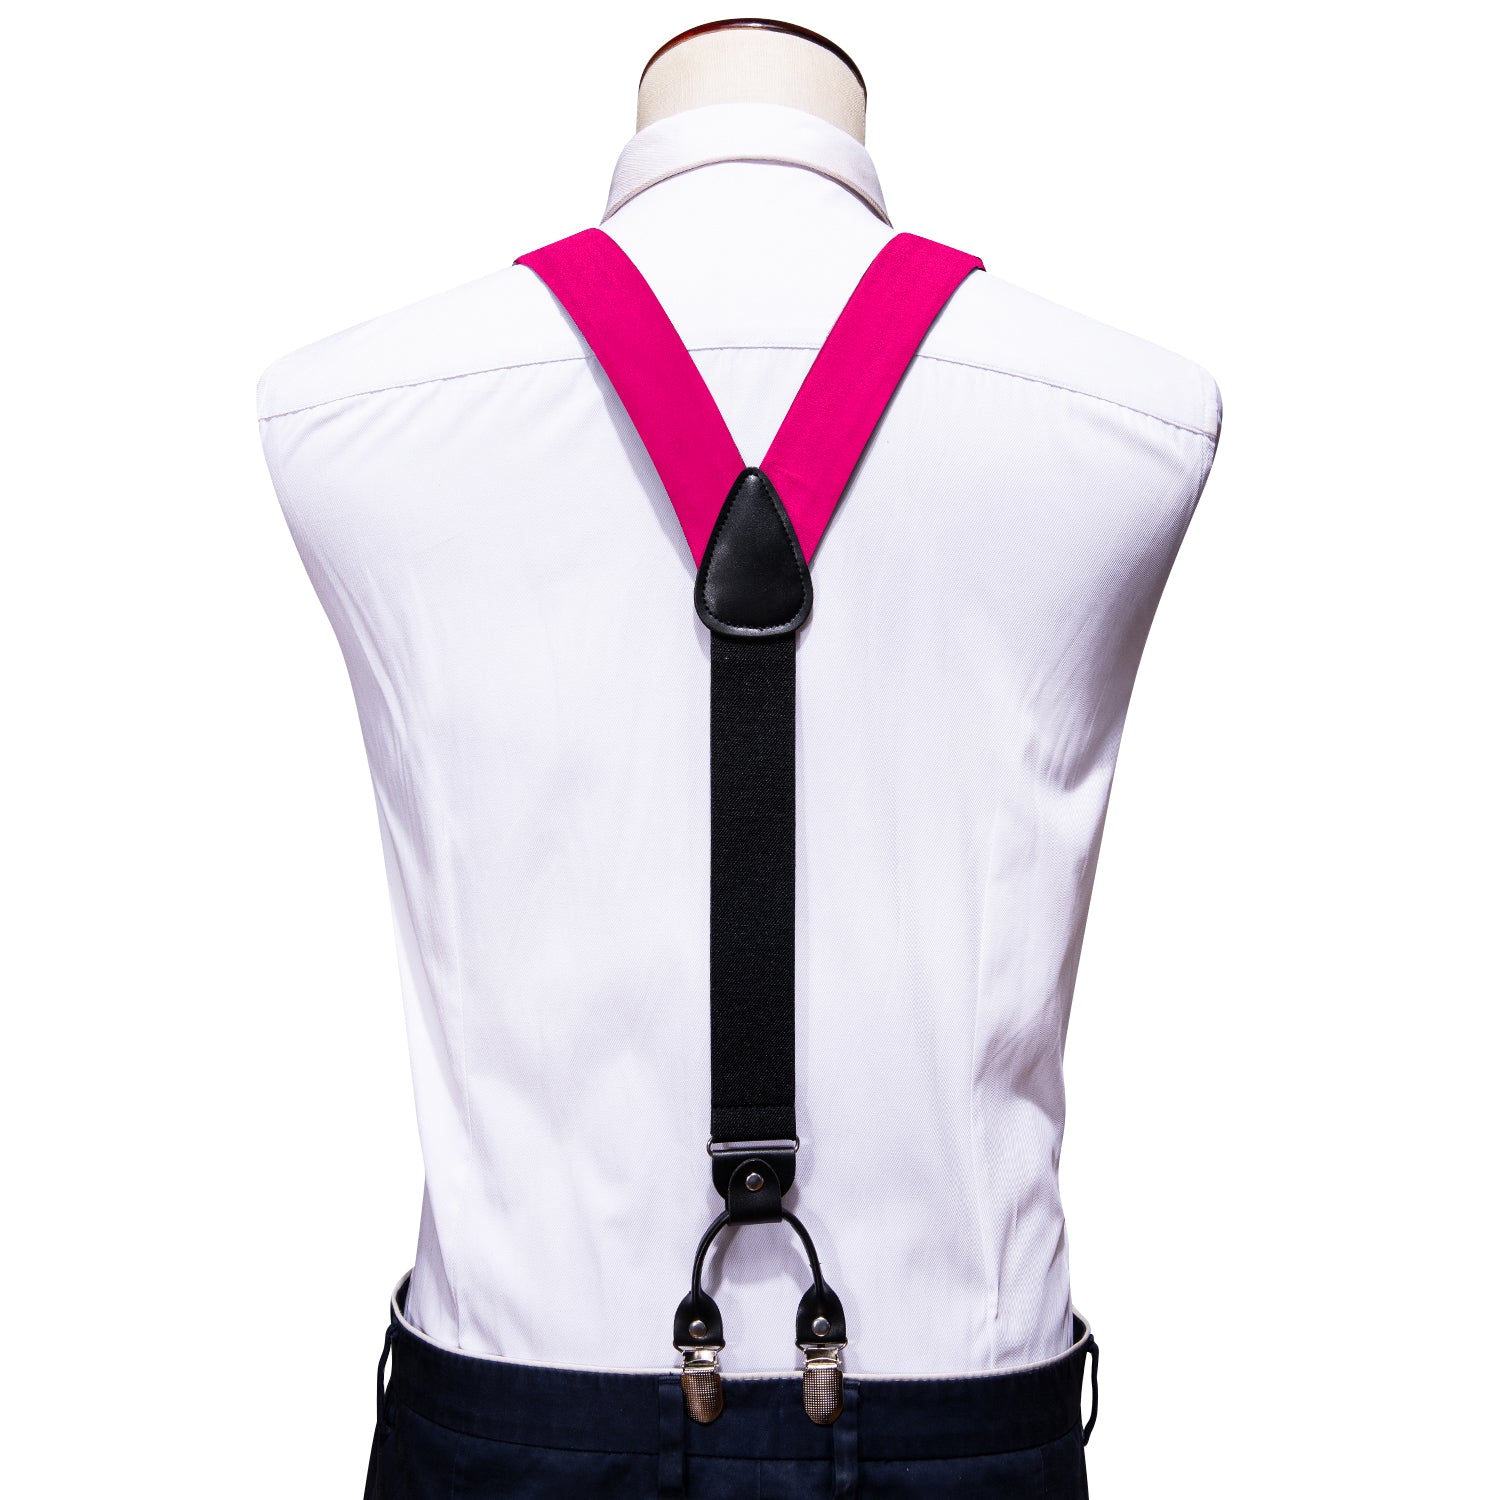 Rose Red Solid Y Back Adjustable Bow Tie Suspenders Set